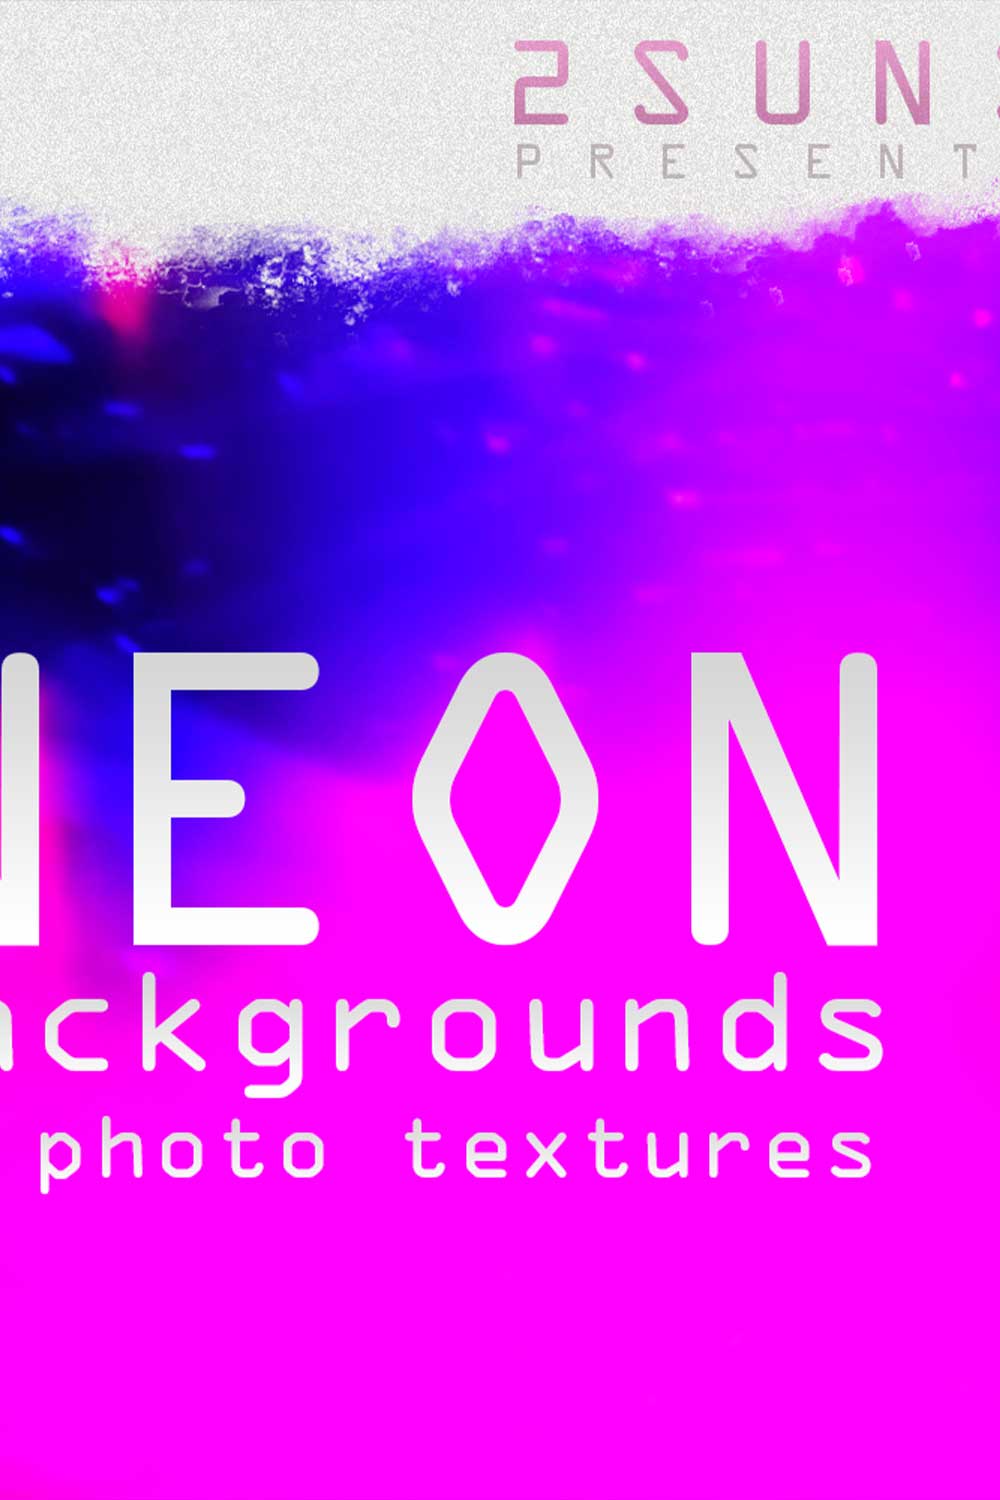 Neon Holographic Digital Background Overlay Pinterest Image.